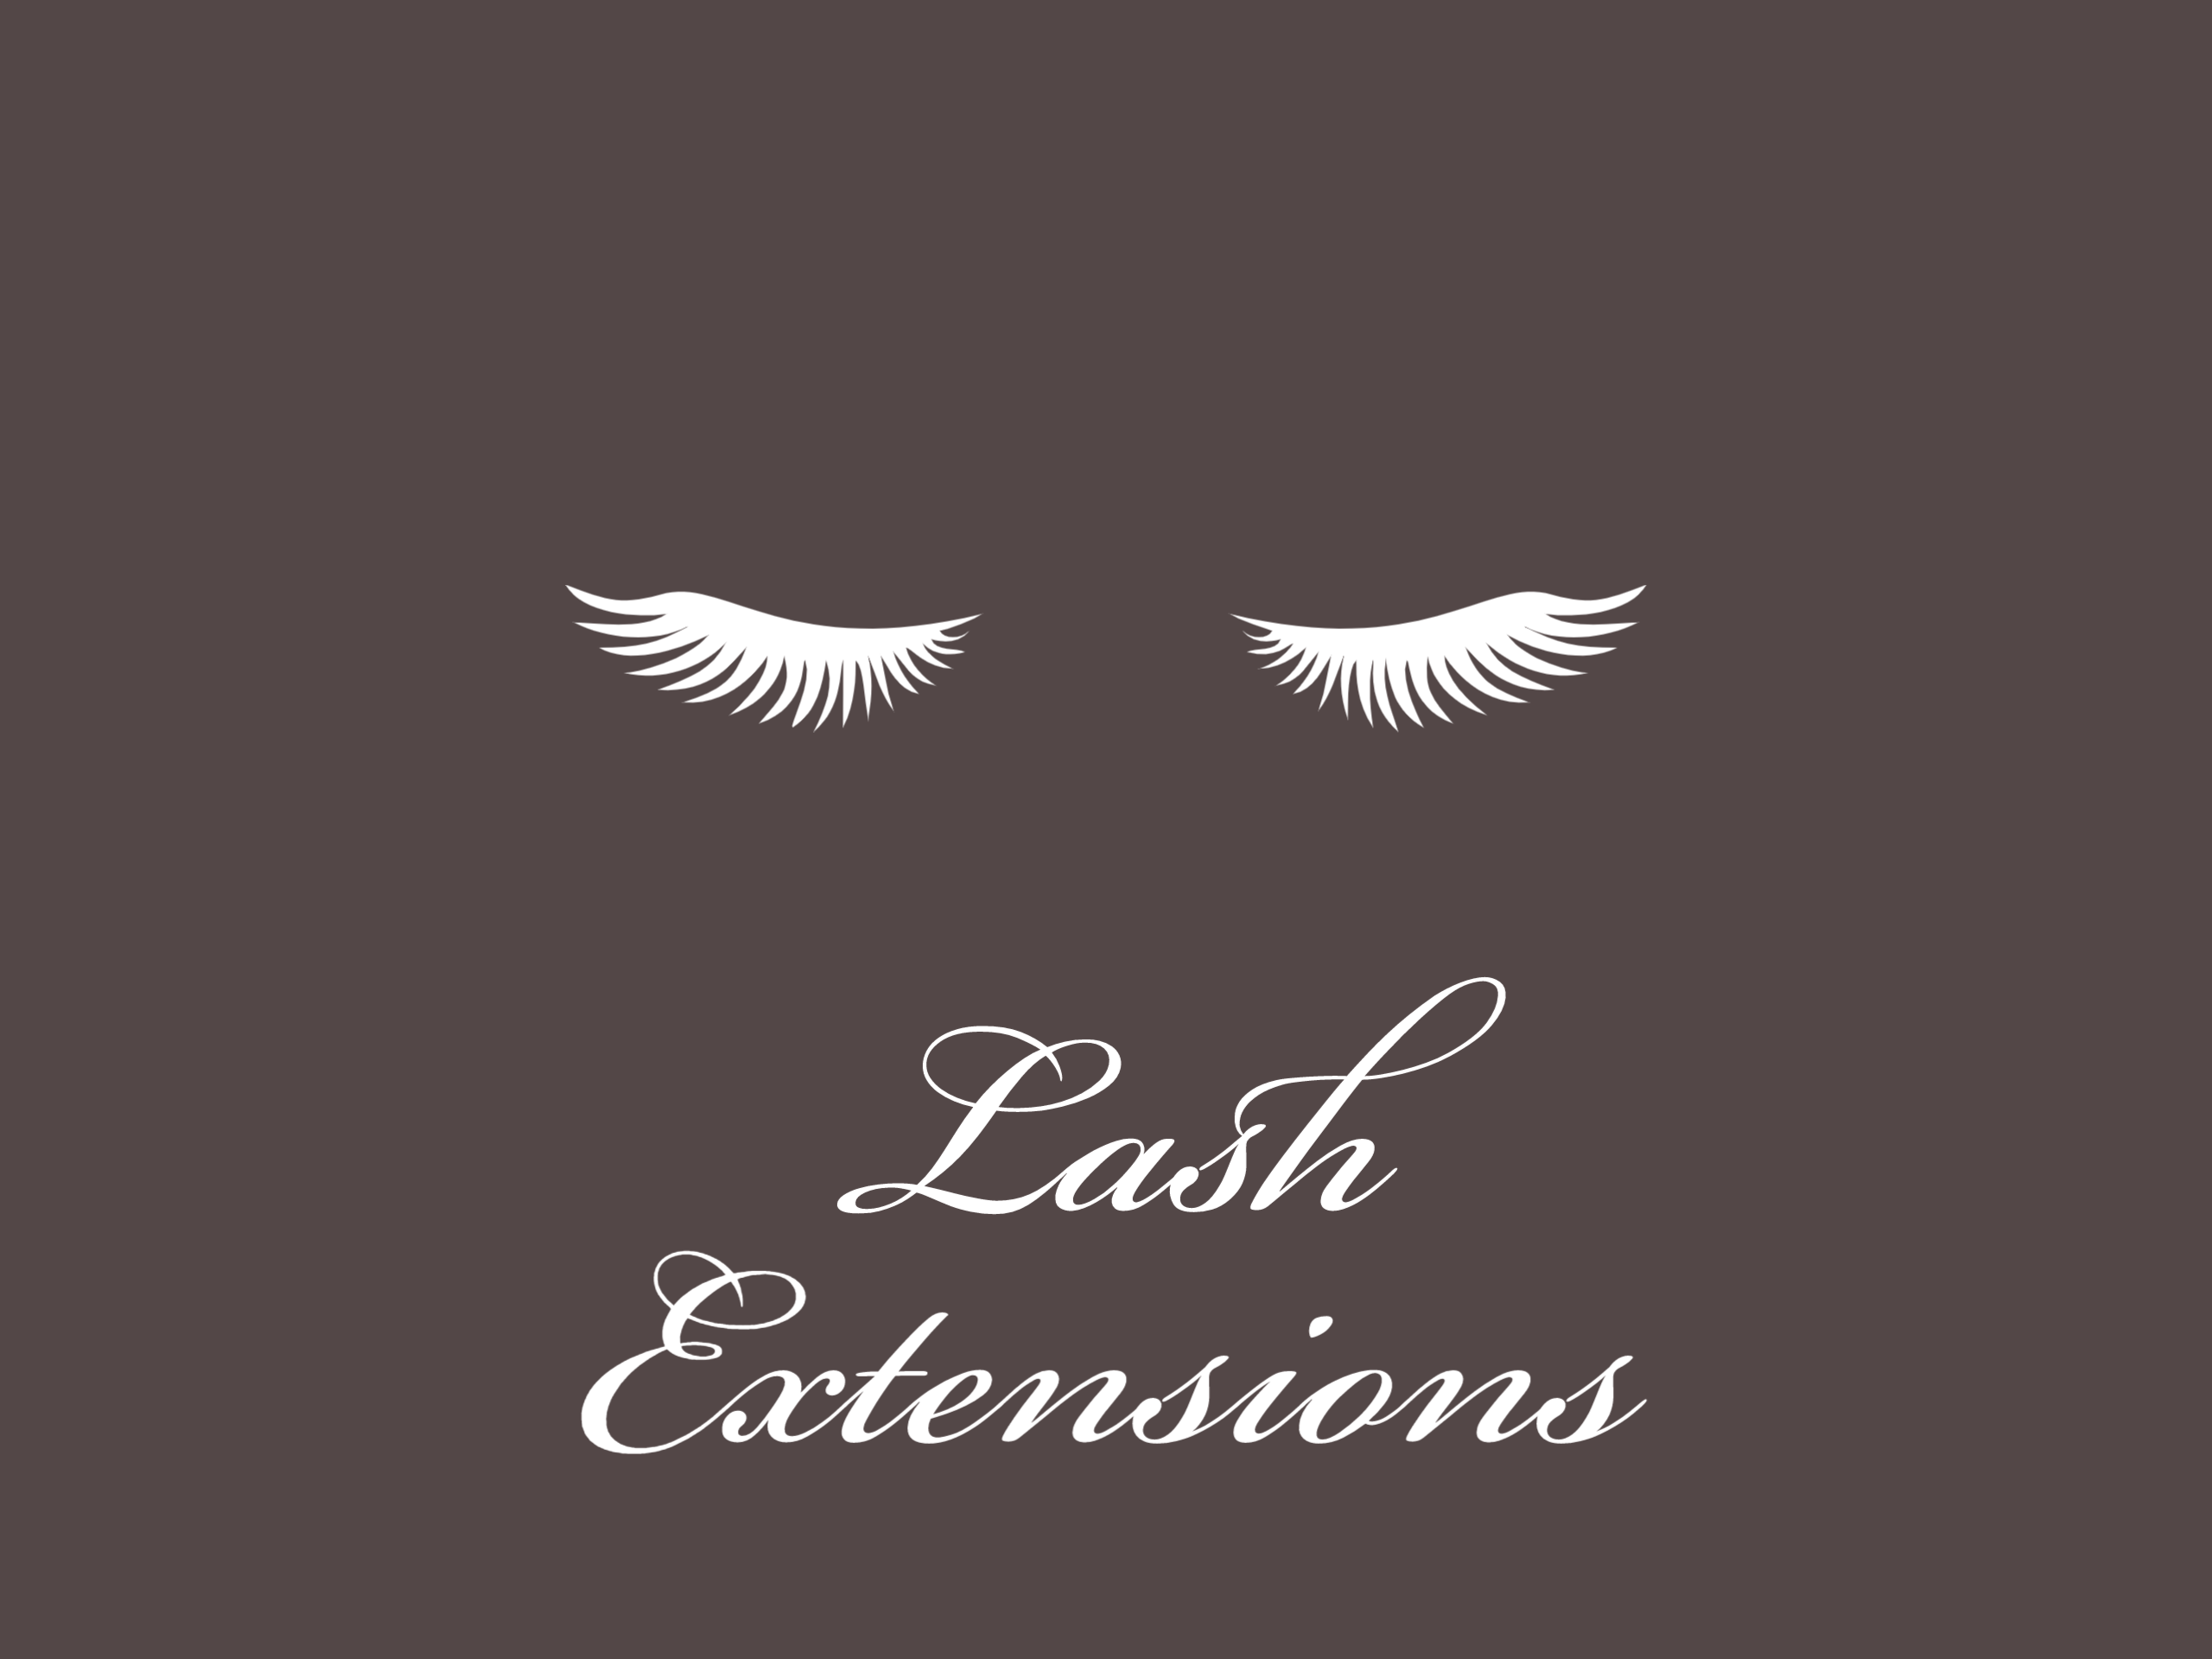 560-lashes-website-1-16079731658012.jpg